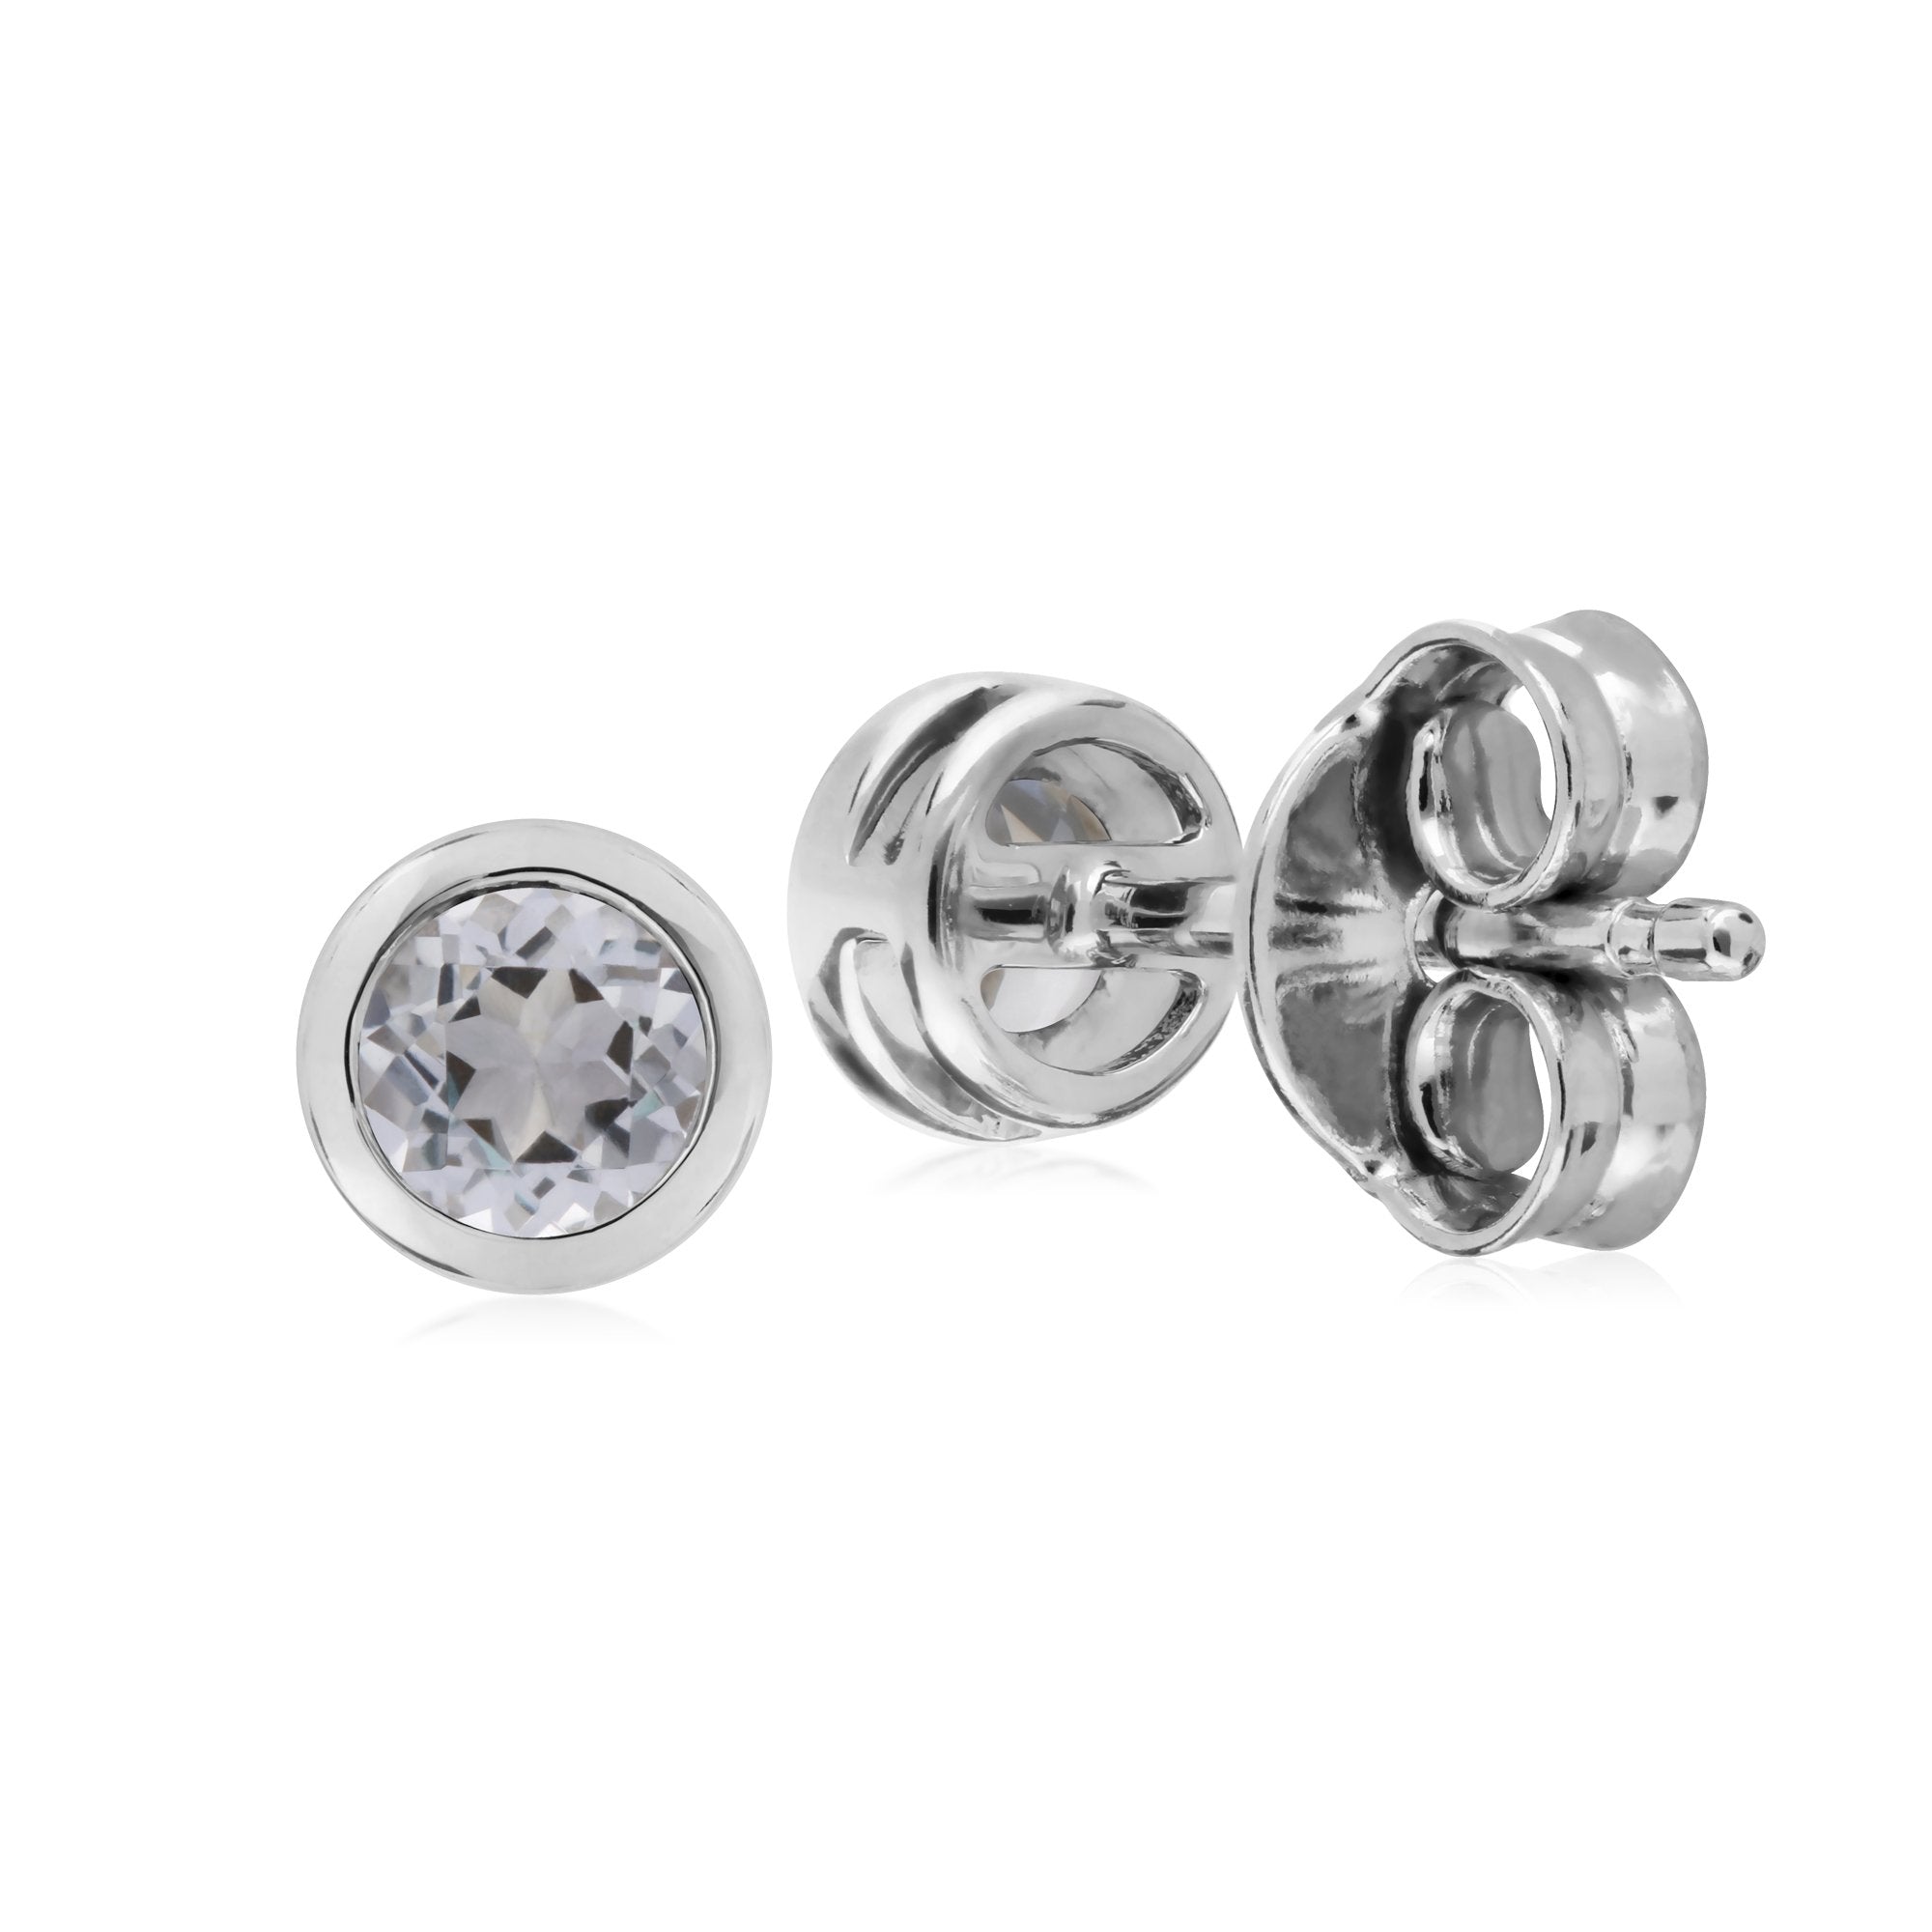 Classic Round White Topaz Bezel Stud Earrings in 925 Sterling Silver